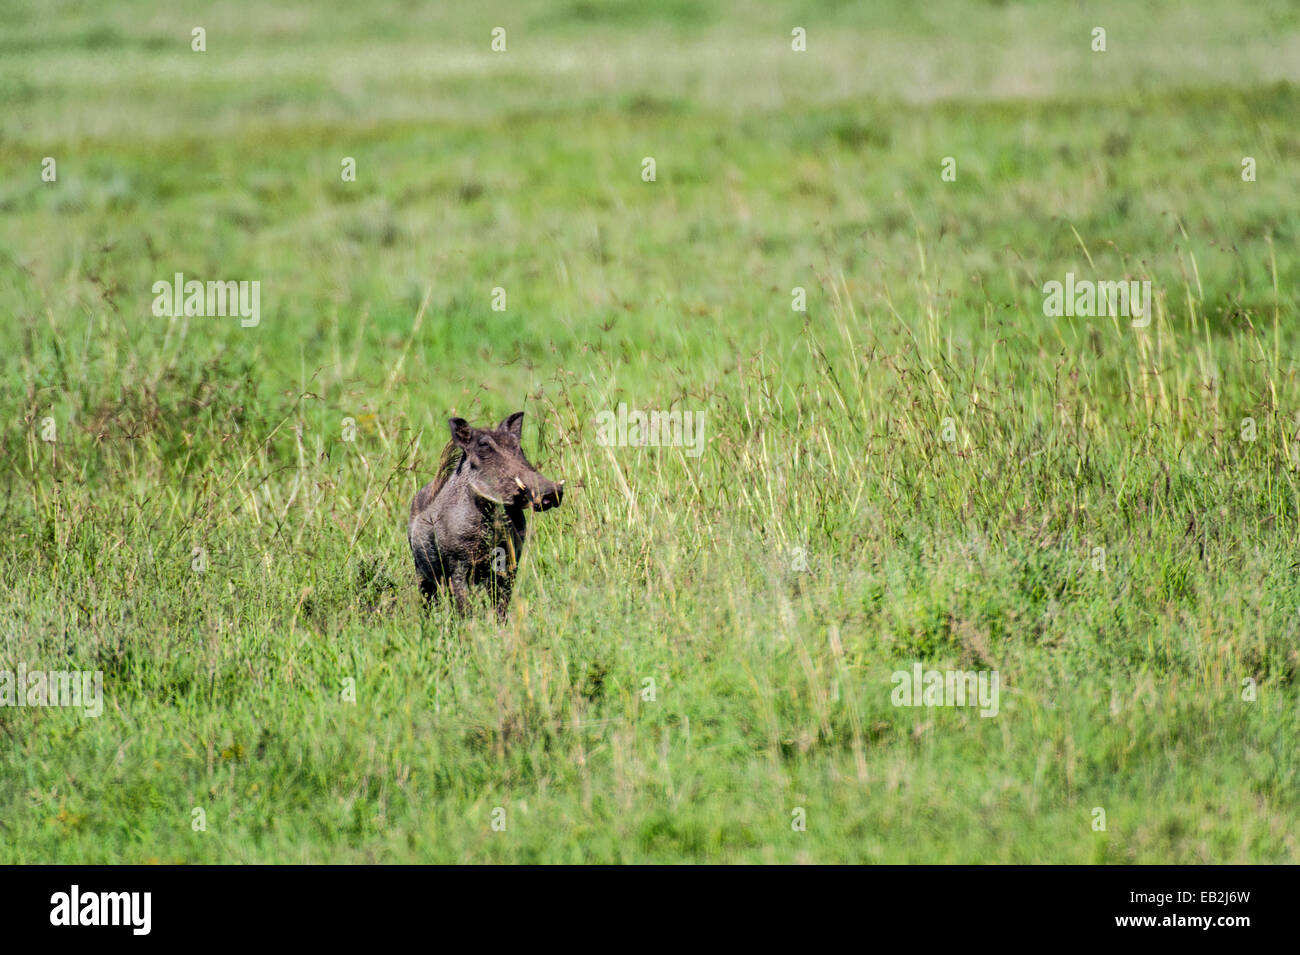 An alert and wary Warthog scours the savannah grassland for predators. Stock Photo